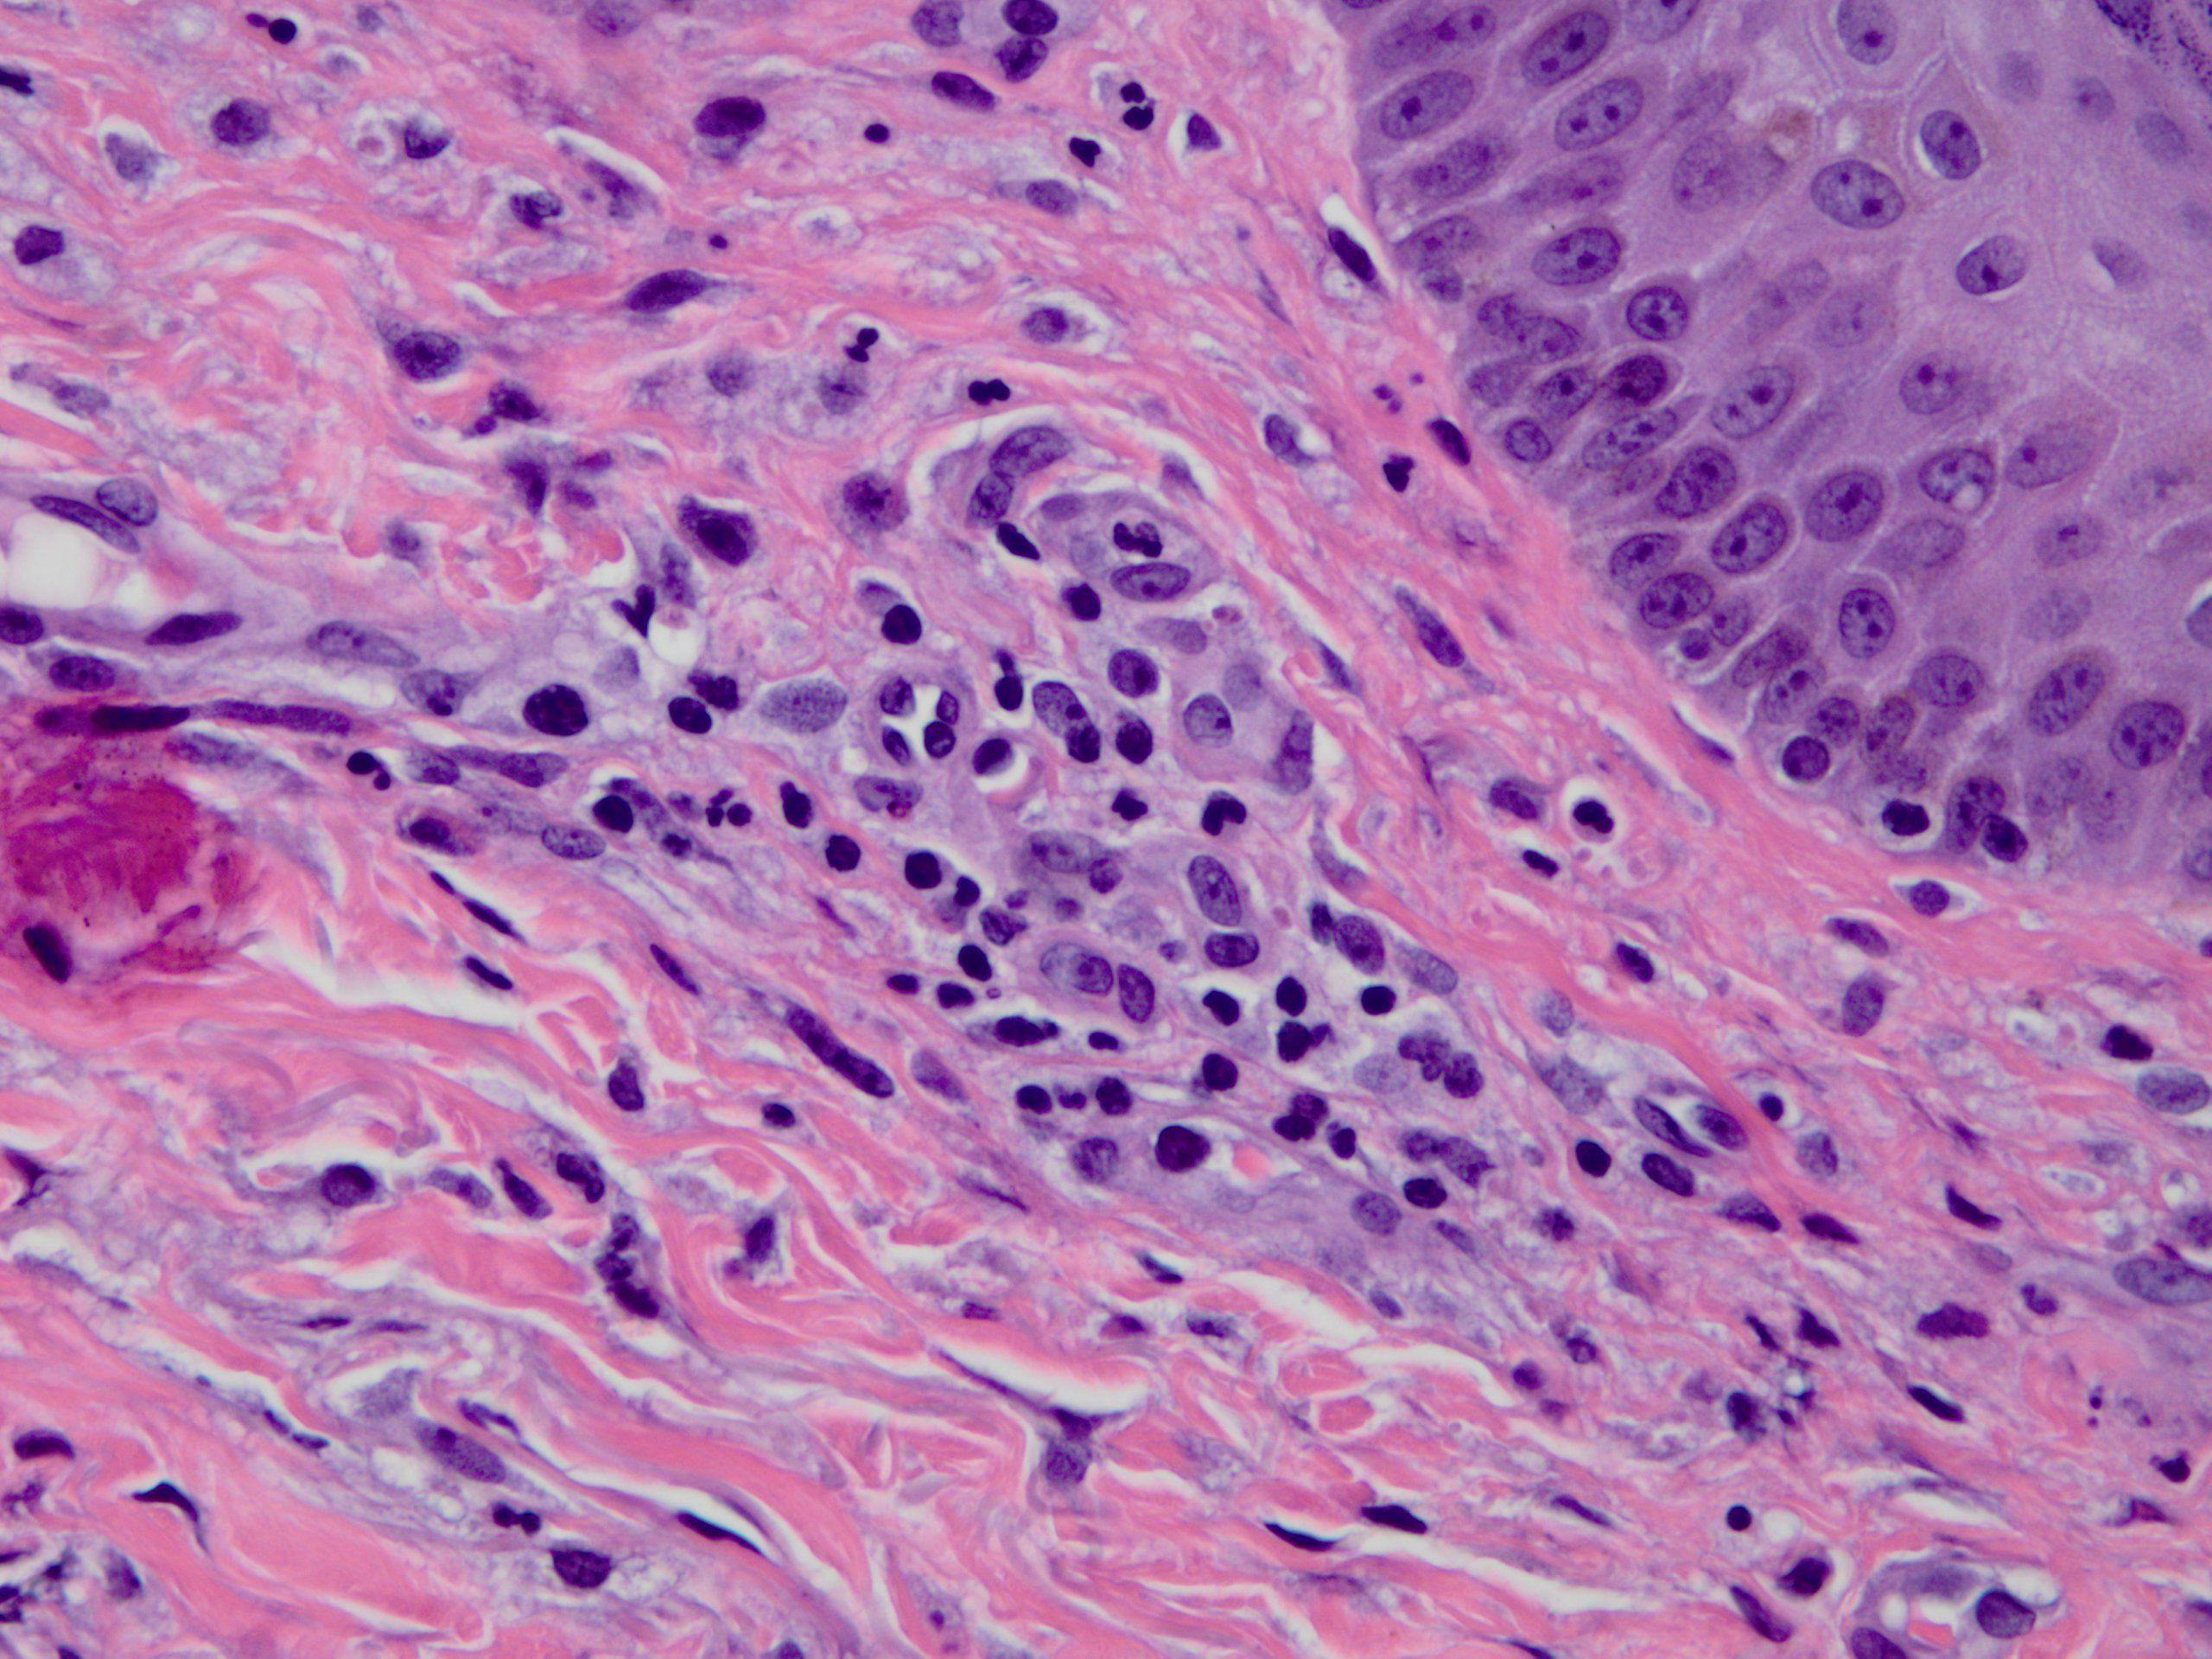 Cutaneous Leukocytoclastic Vasculitis